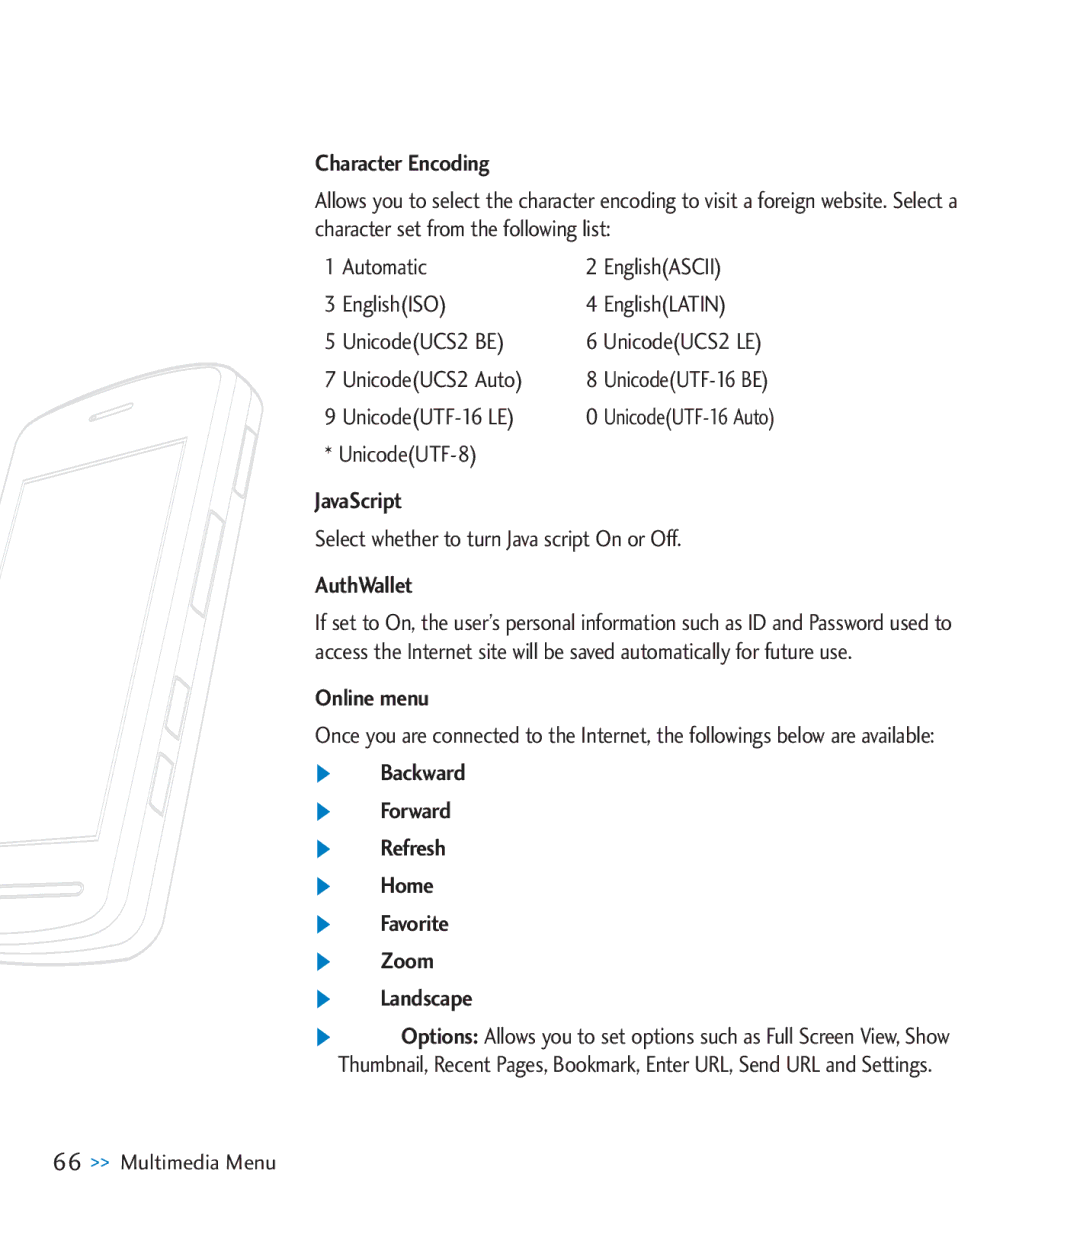 LG Electronics CU920 manual Character Encoding, JavaScript, AuthWallet, Online menu 